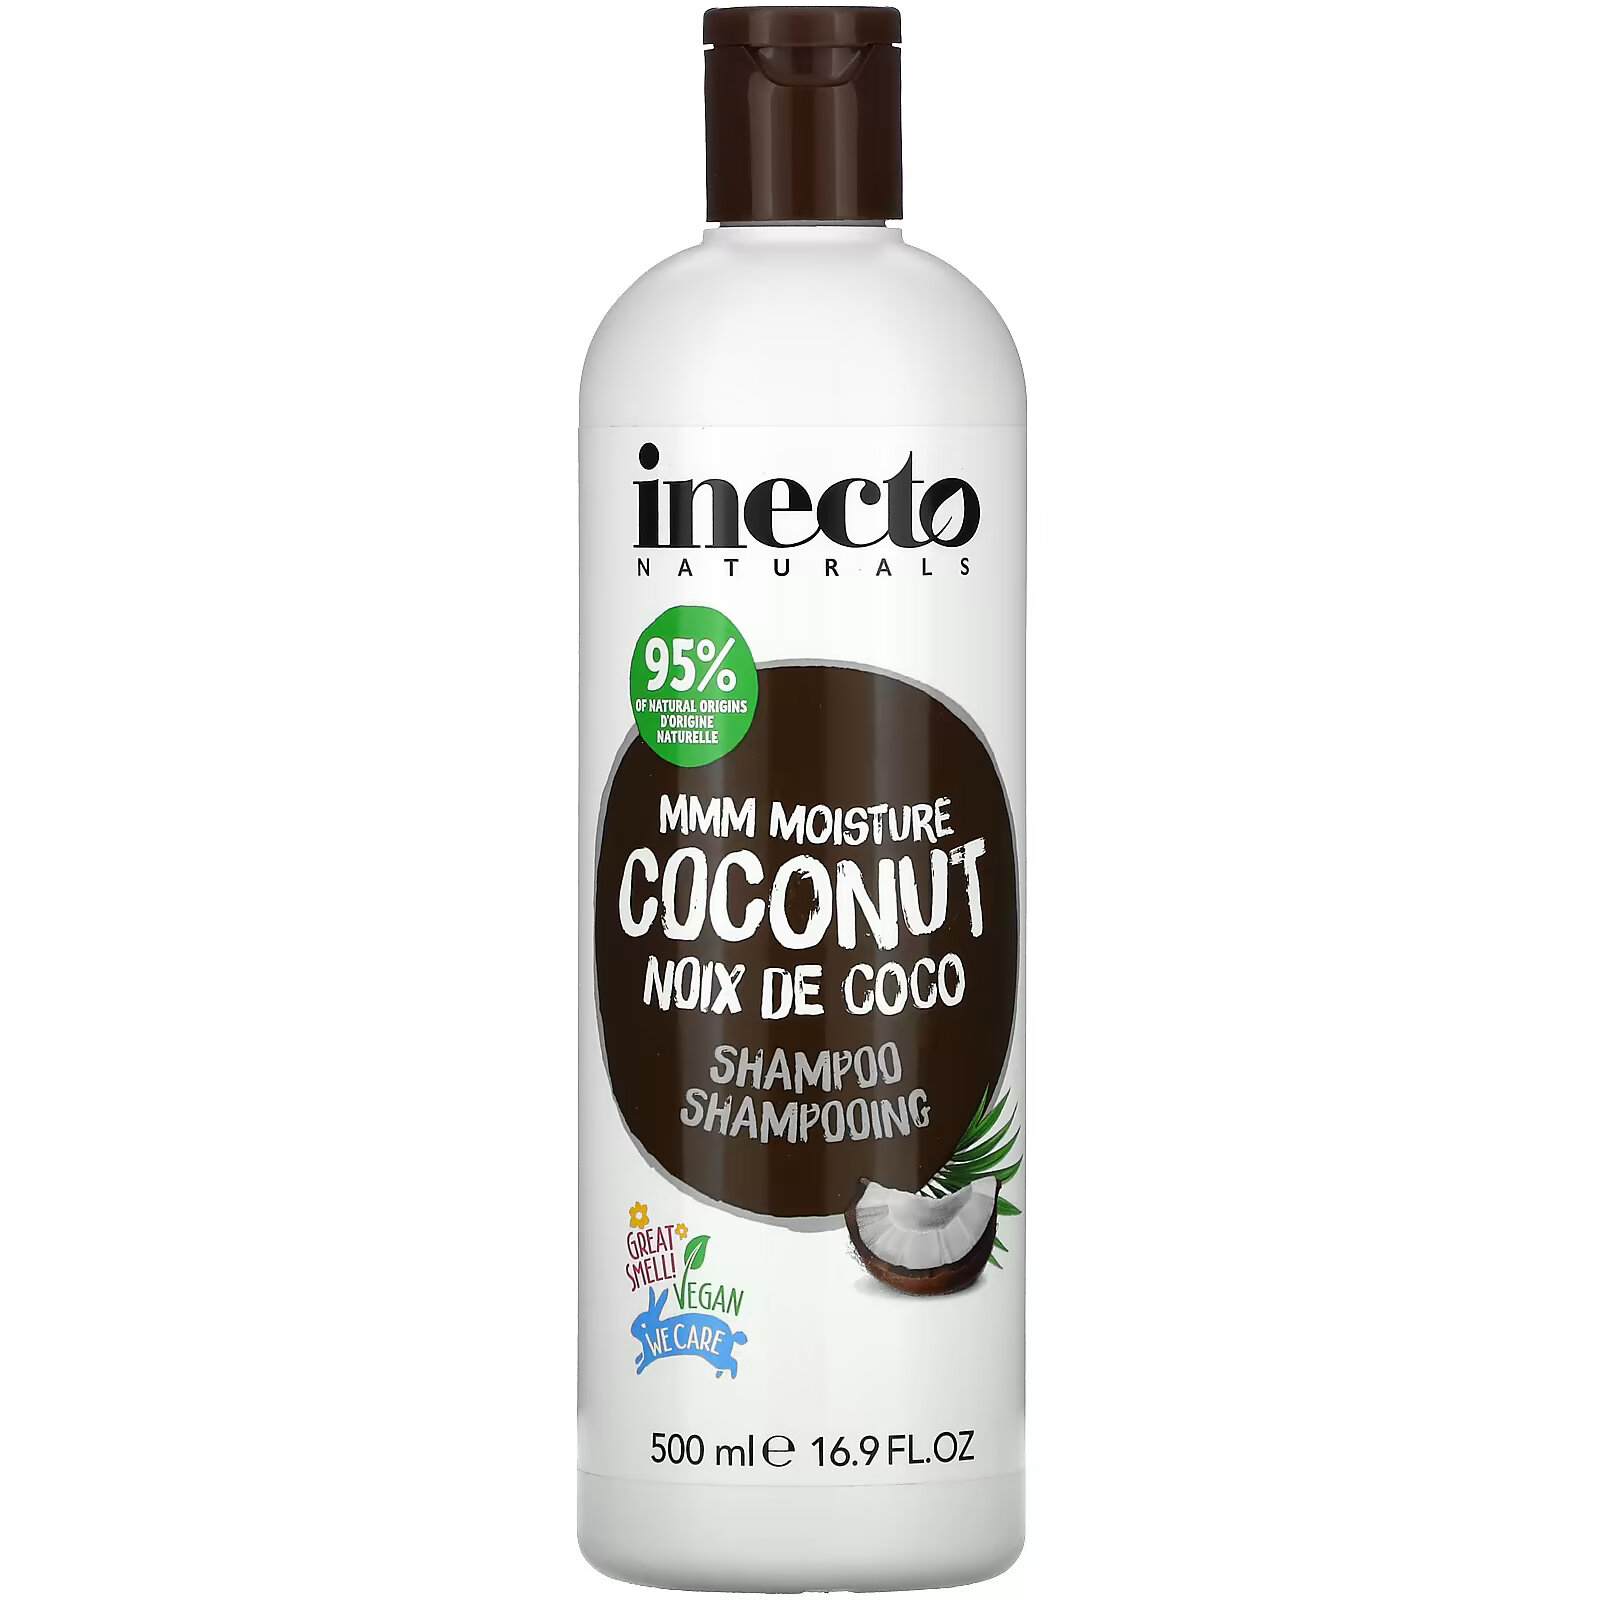 Inecto, Mmm Moisture Coconut, шампунь, 500 мл (16,9 жидких унций) inecto marvelous moisture coconut кондиционер 500 мл 16 9 жидк унции